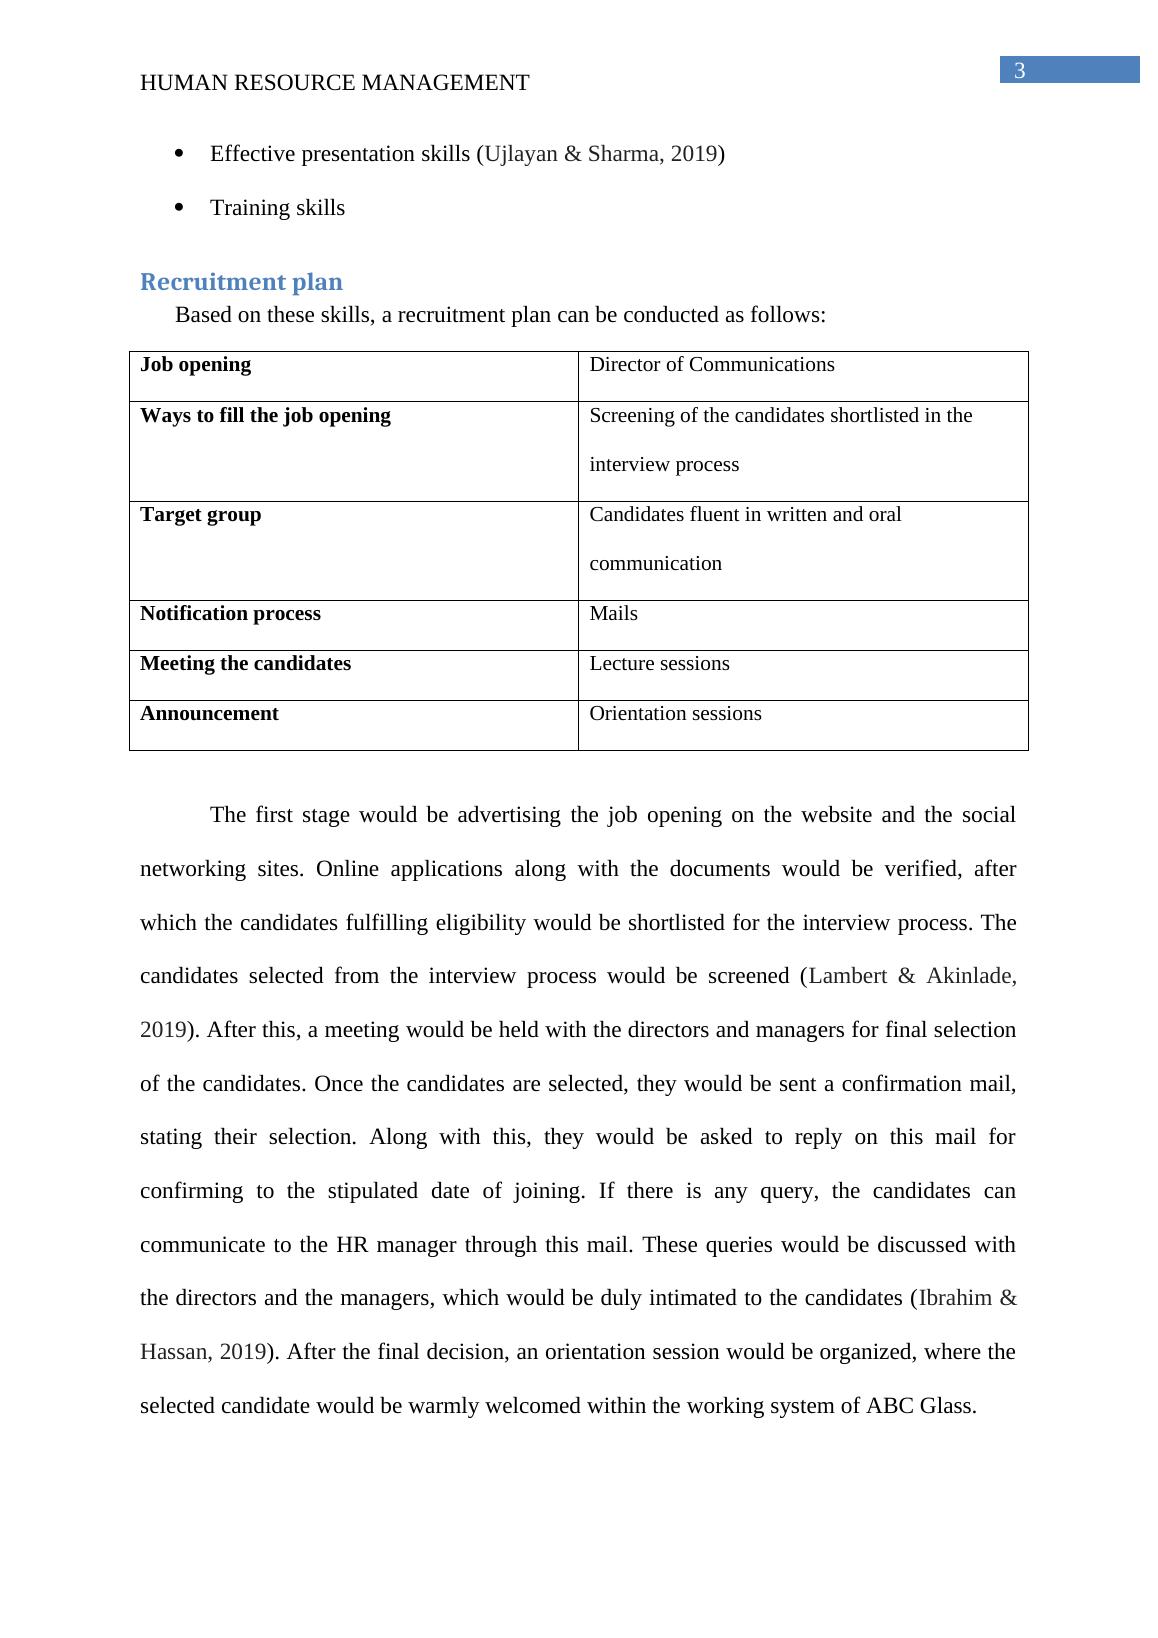 Human Resource Management Procedure in PDF_4